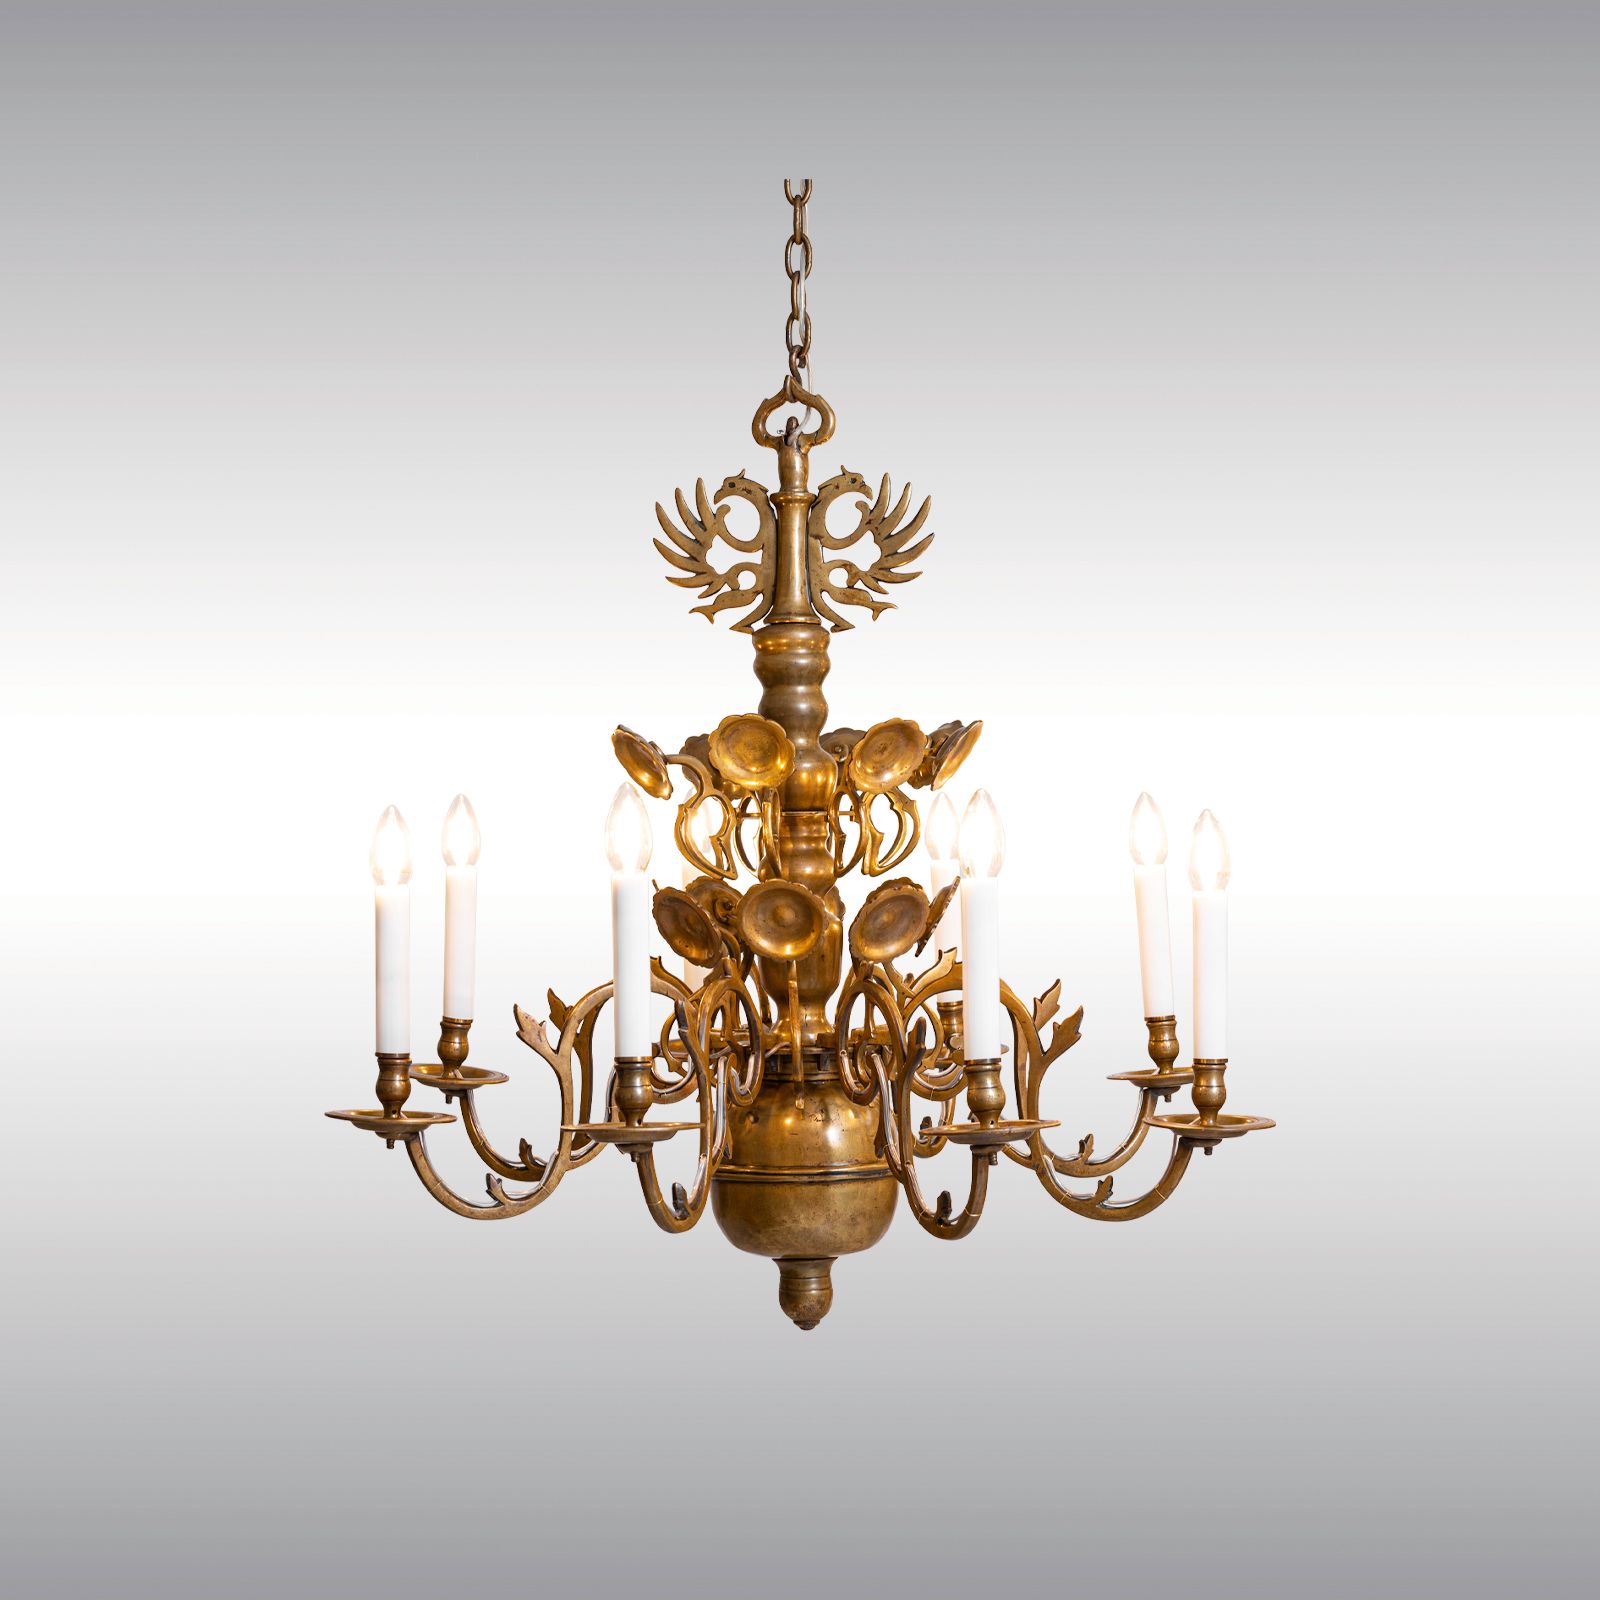 WOKA LAMPS VIENNA - OrderNr.: 80059|Polish Baroque Style Chandelier 18th century